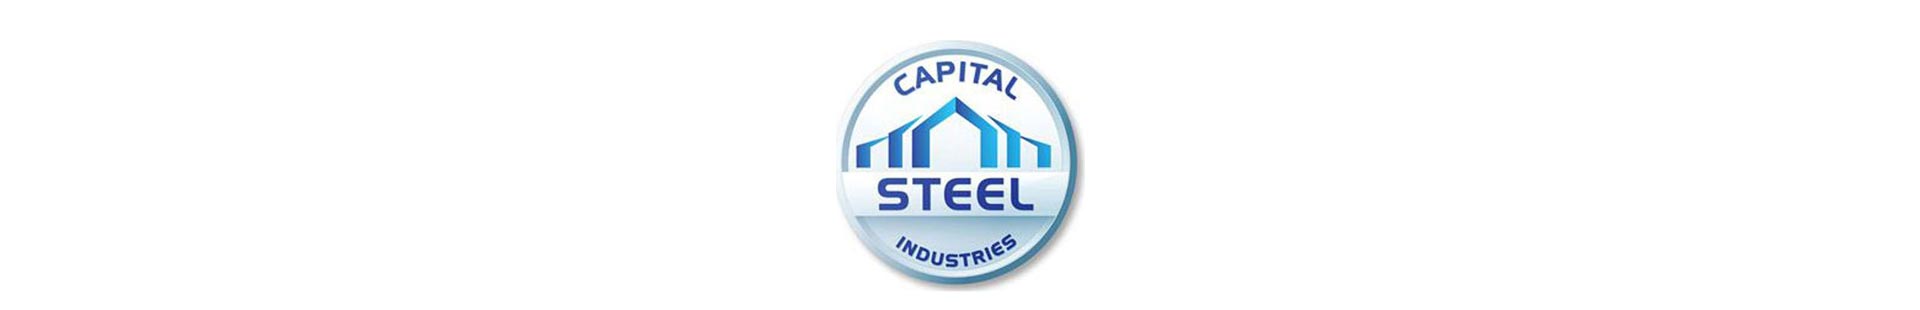 Proud Independent Dealer for Capital Steel Industries